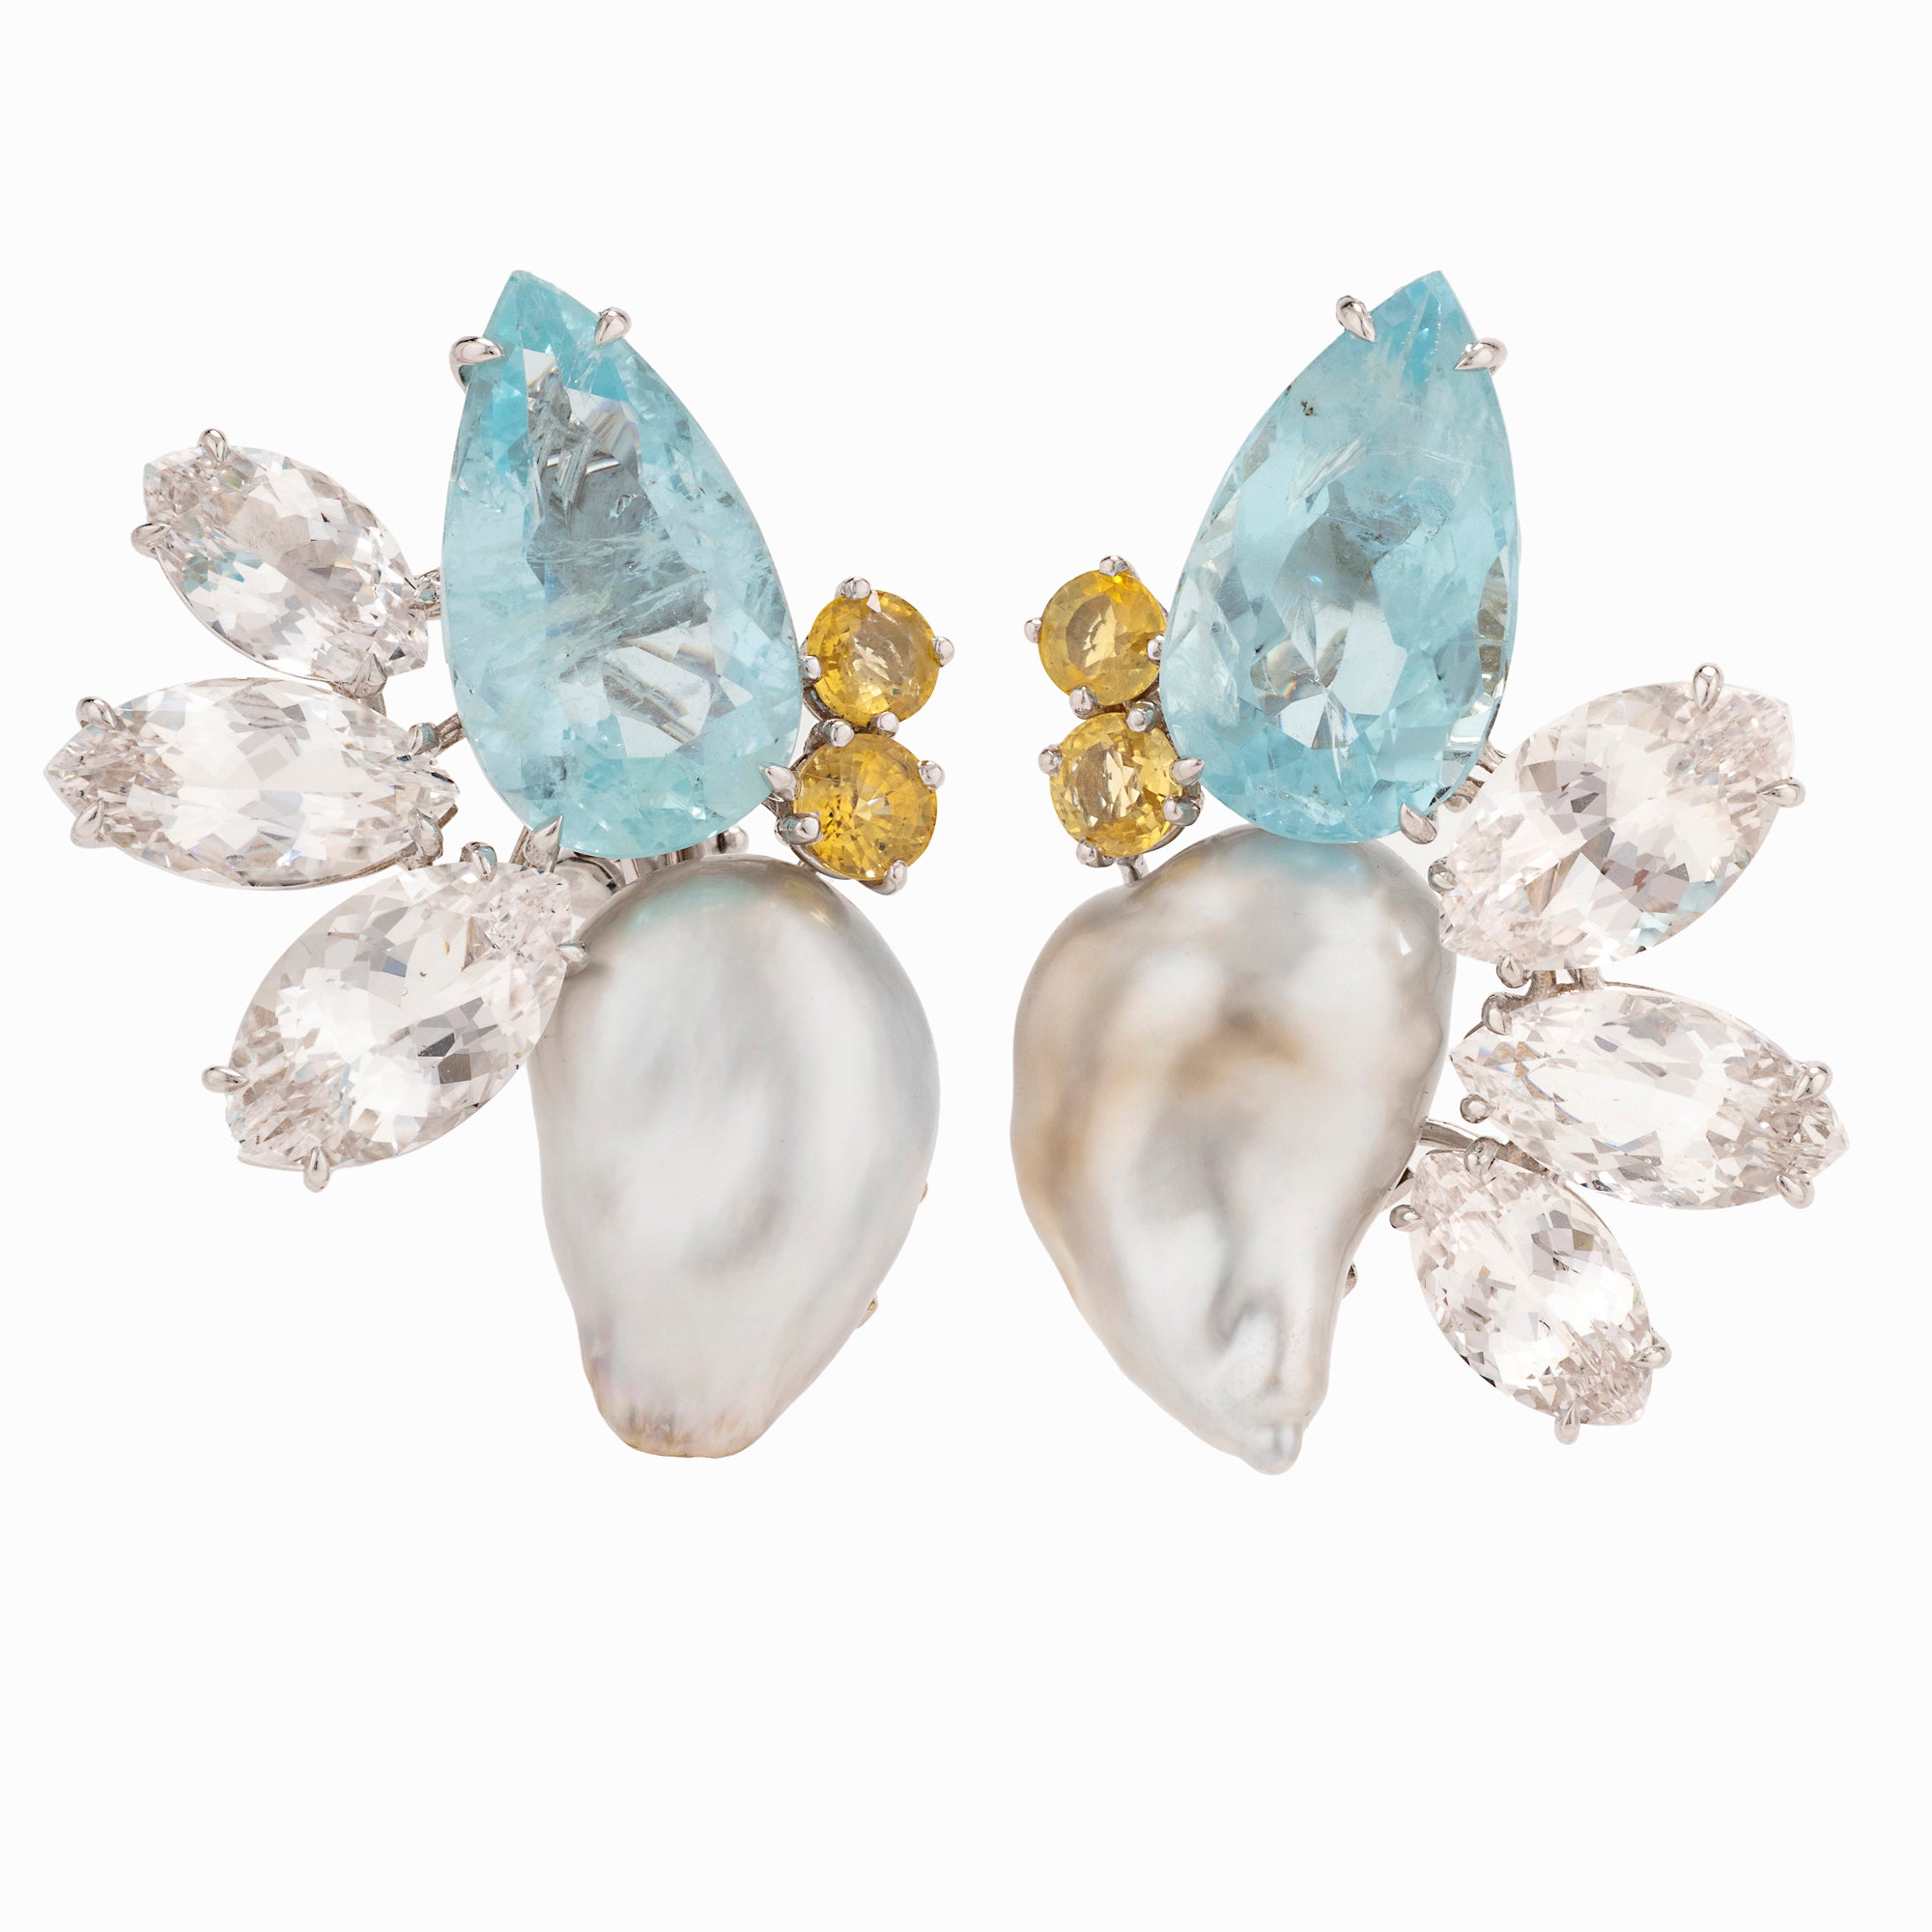 Lion vii keshi and aquamarine earrings